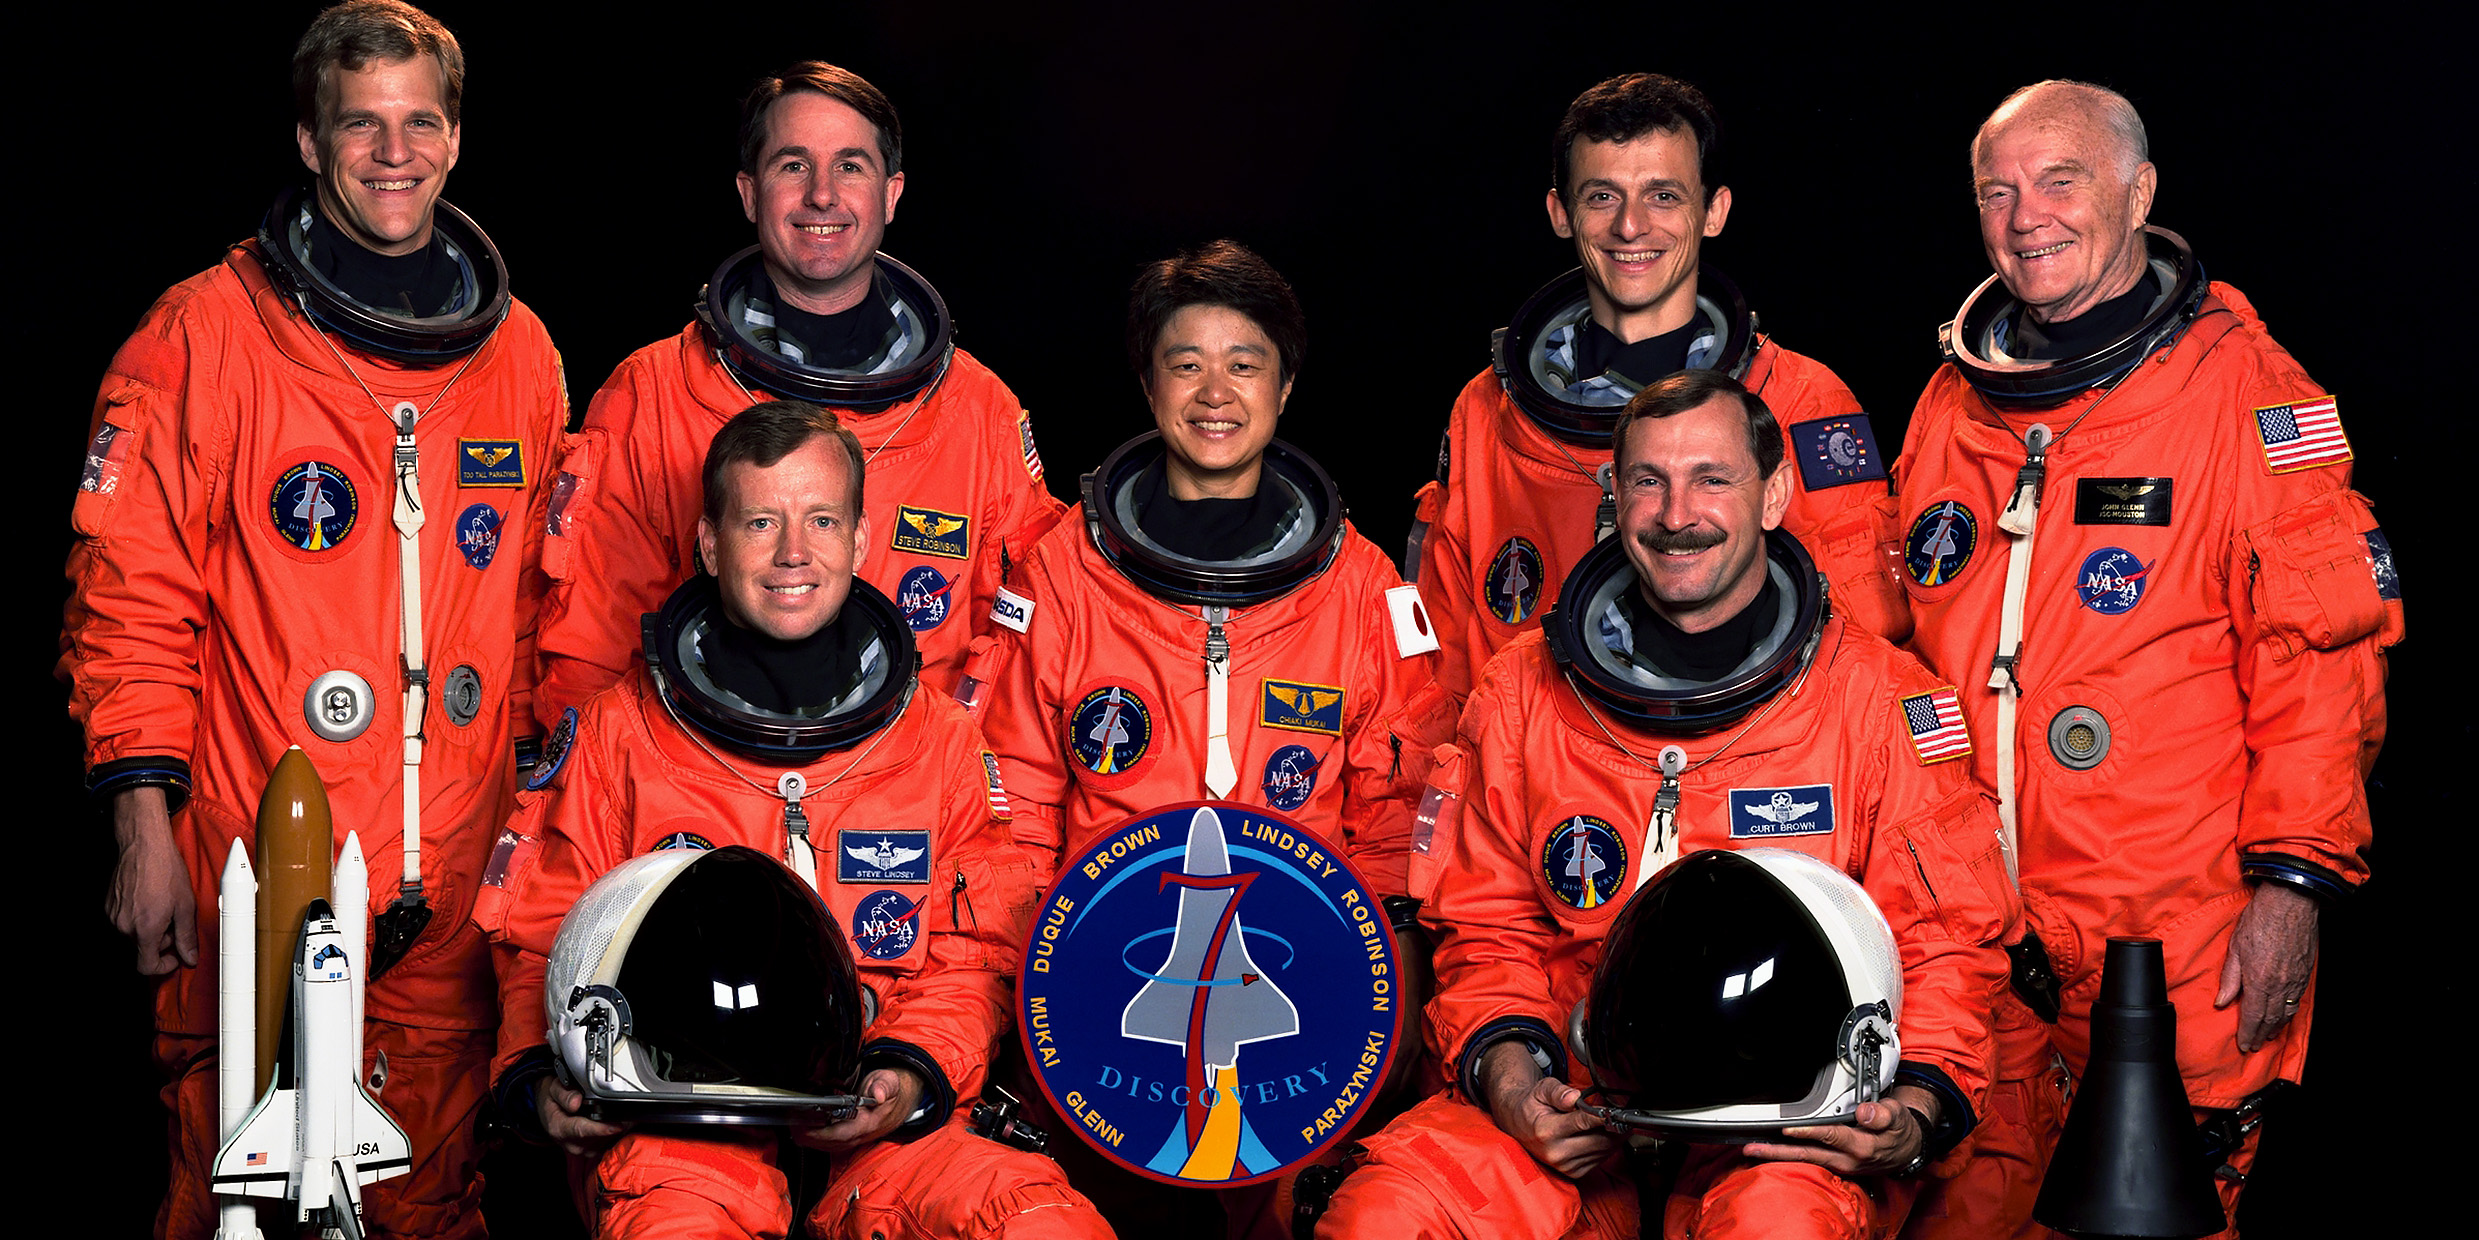 Group photo of NASA astronauts, including an elderly John Glenn